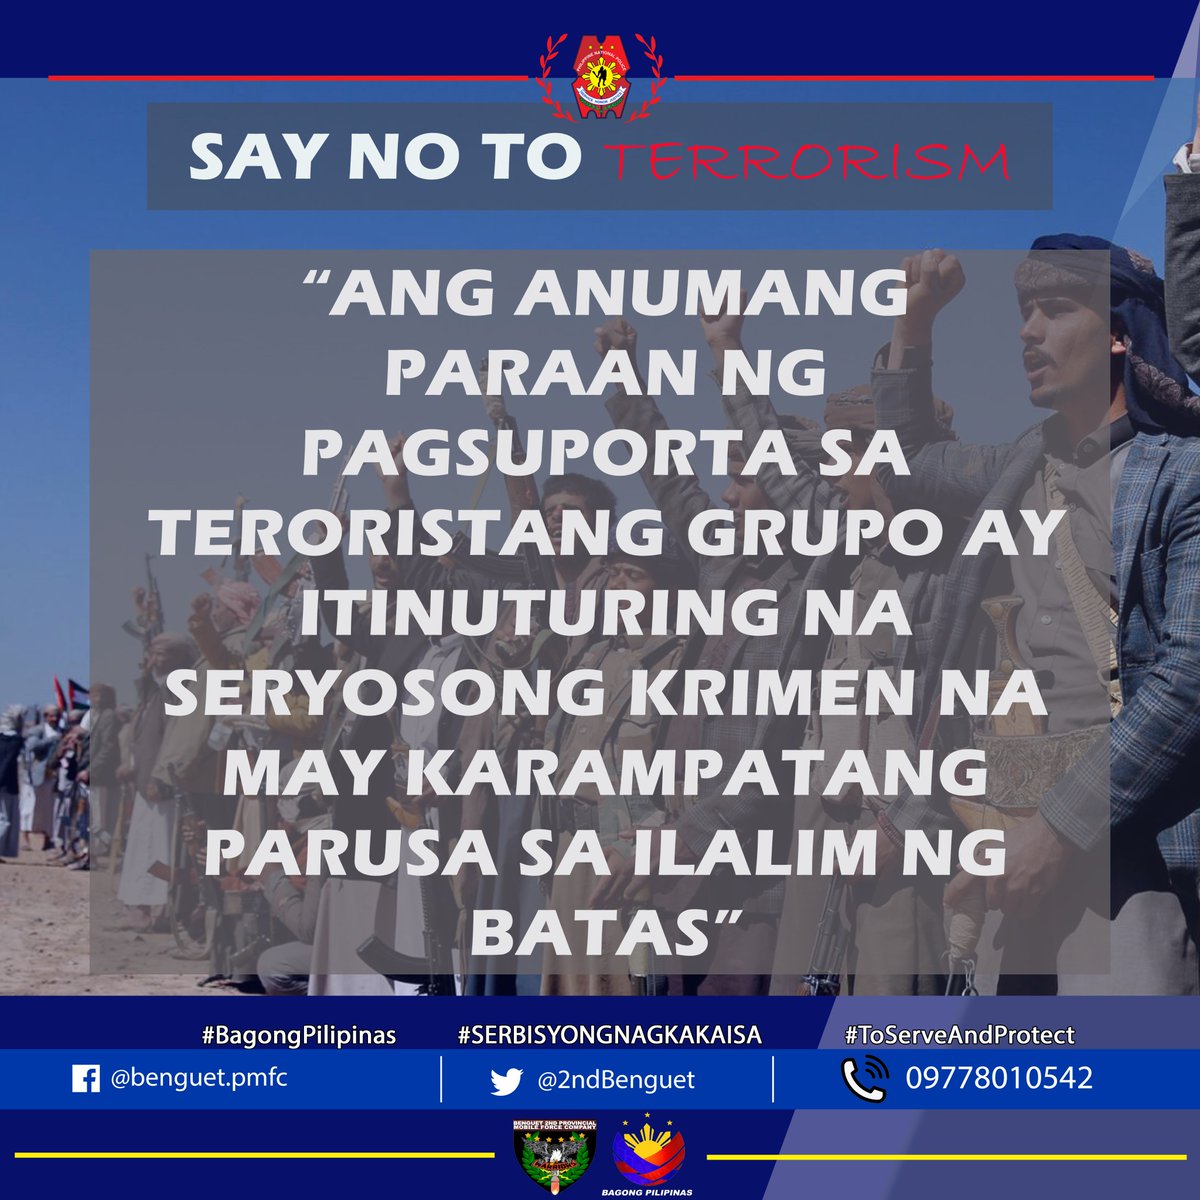 𝐒𝐀𝐘 𝐍𝐎 𝐓𝐎 𝐓𝐄𝐑𝐑𝐎𝐑𝐈𝐒𝐌 '𝙎𝙖 𝘽𝙖𝙜𝙤𝙣𝙜 𝙋𝙞𝙡𝙞𝙥𝙞𝙣𝙖𝙨, 𝙖𝙣𝙜 𝙂𝙪𝙨𝙩𝙤 𝙣𝙜 𝙋𝙪𝙡𝙞𝙨, 𝙇𝙞𝙜𝙩𝙖𝙨 𝙆𝙖' #BagongPilipinas #ToServeandProtect